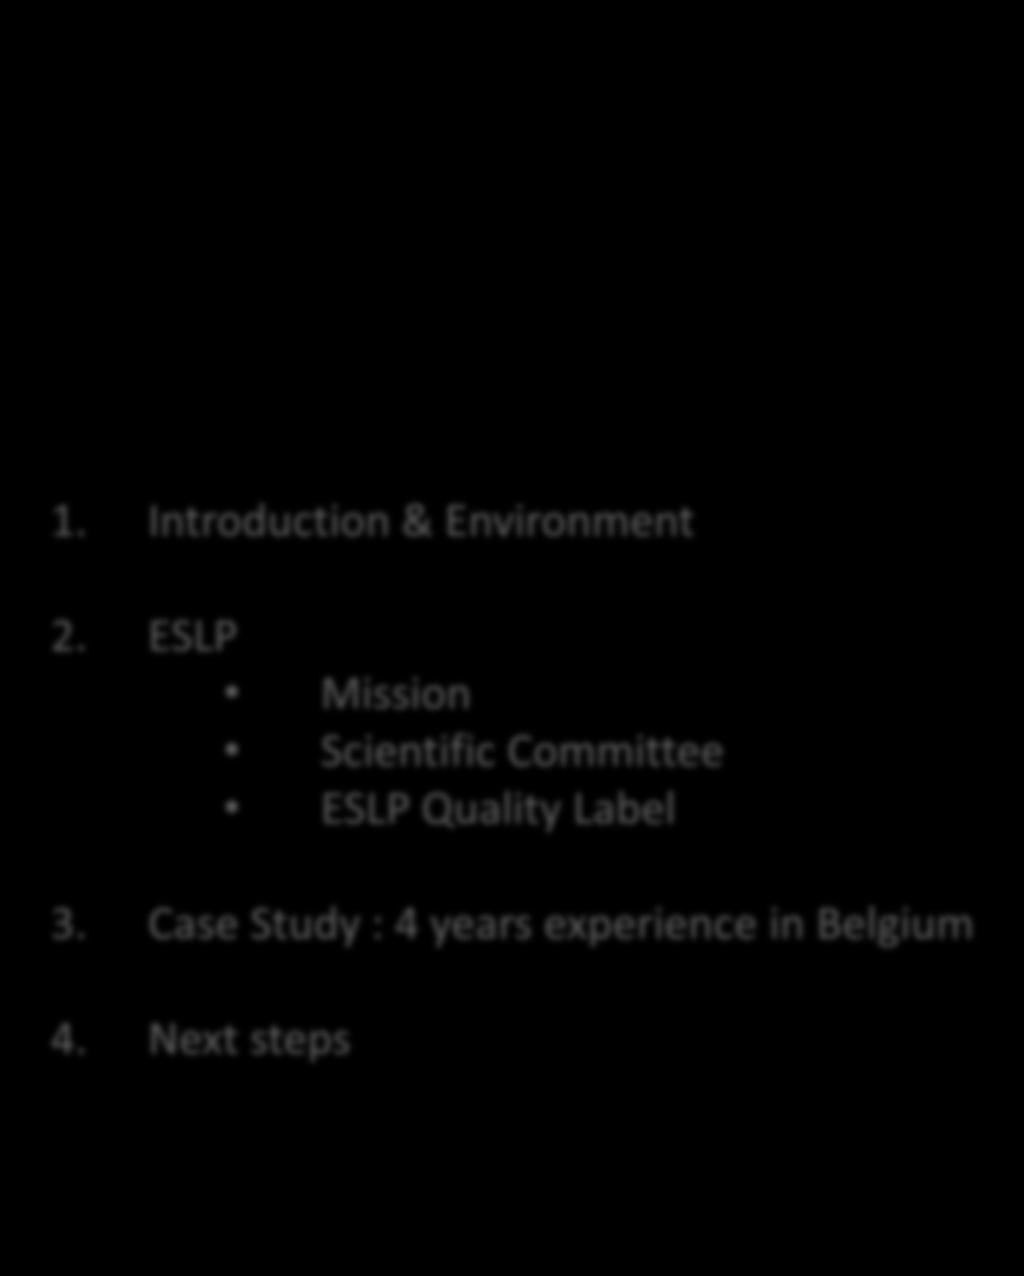 ESLP European Scientific League for Probiotics 1. Introduction & Environment 2.